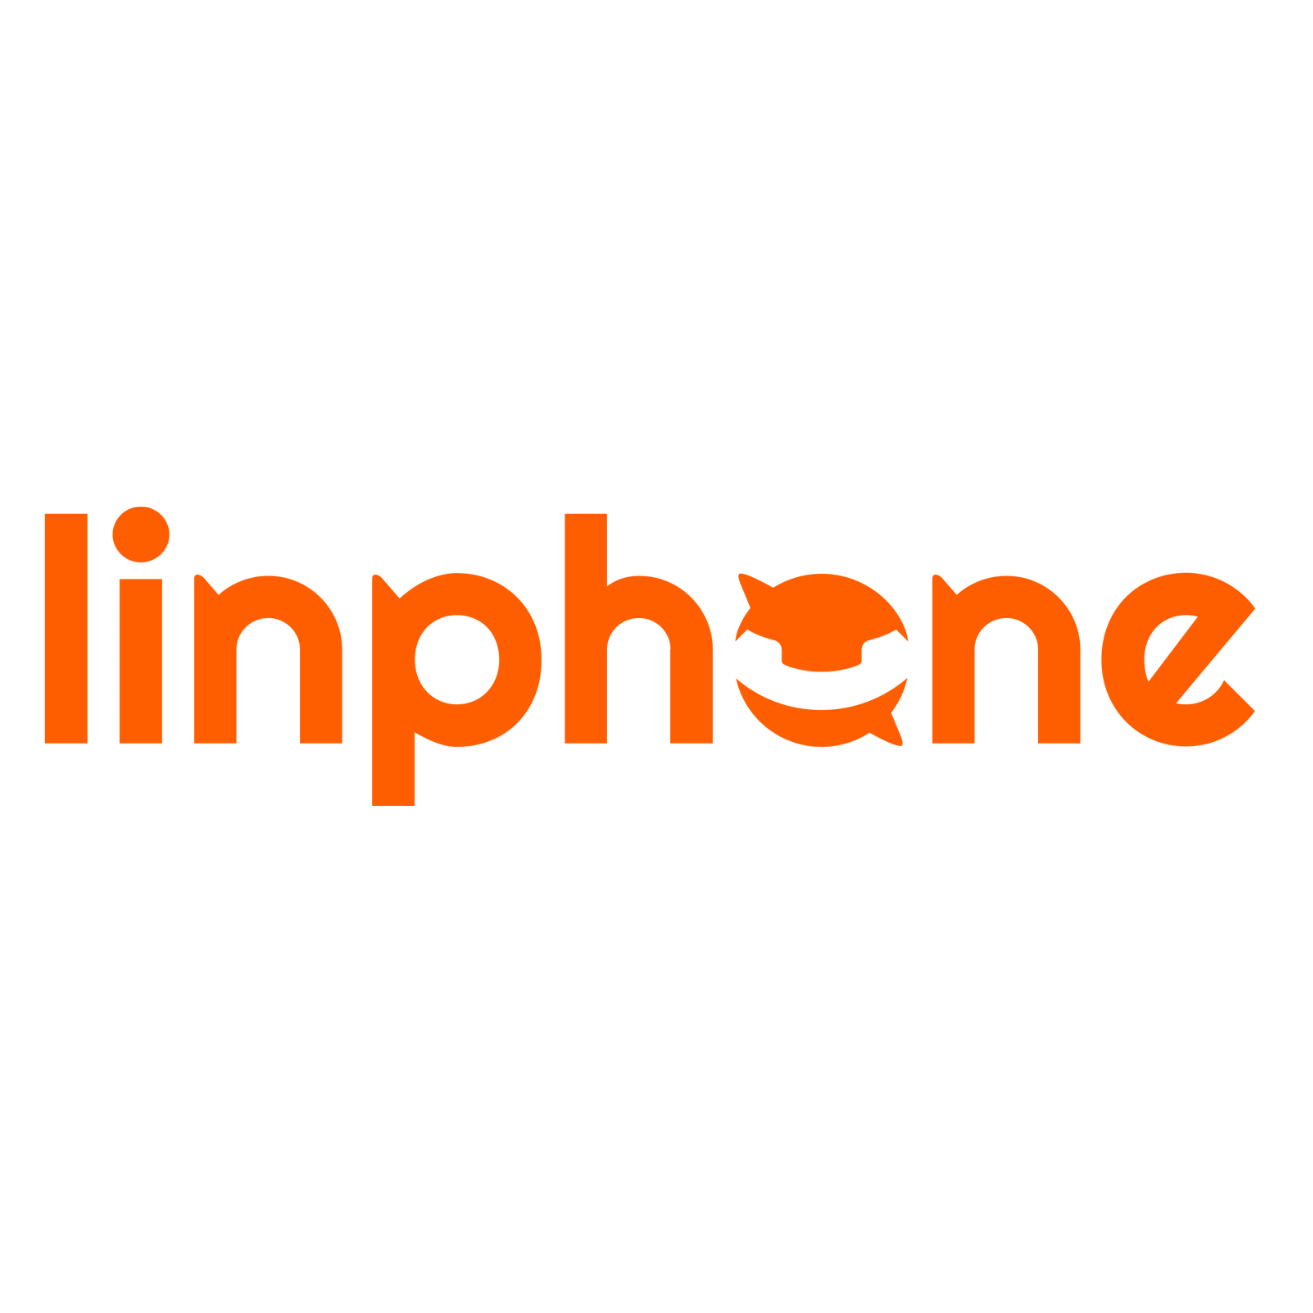 LINPHONE